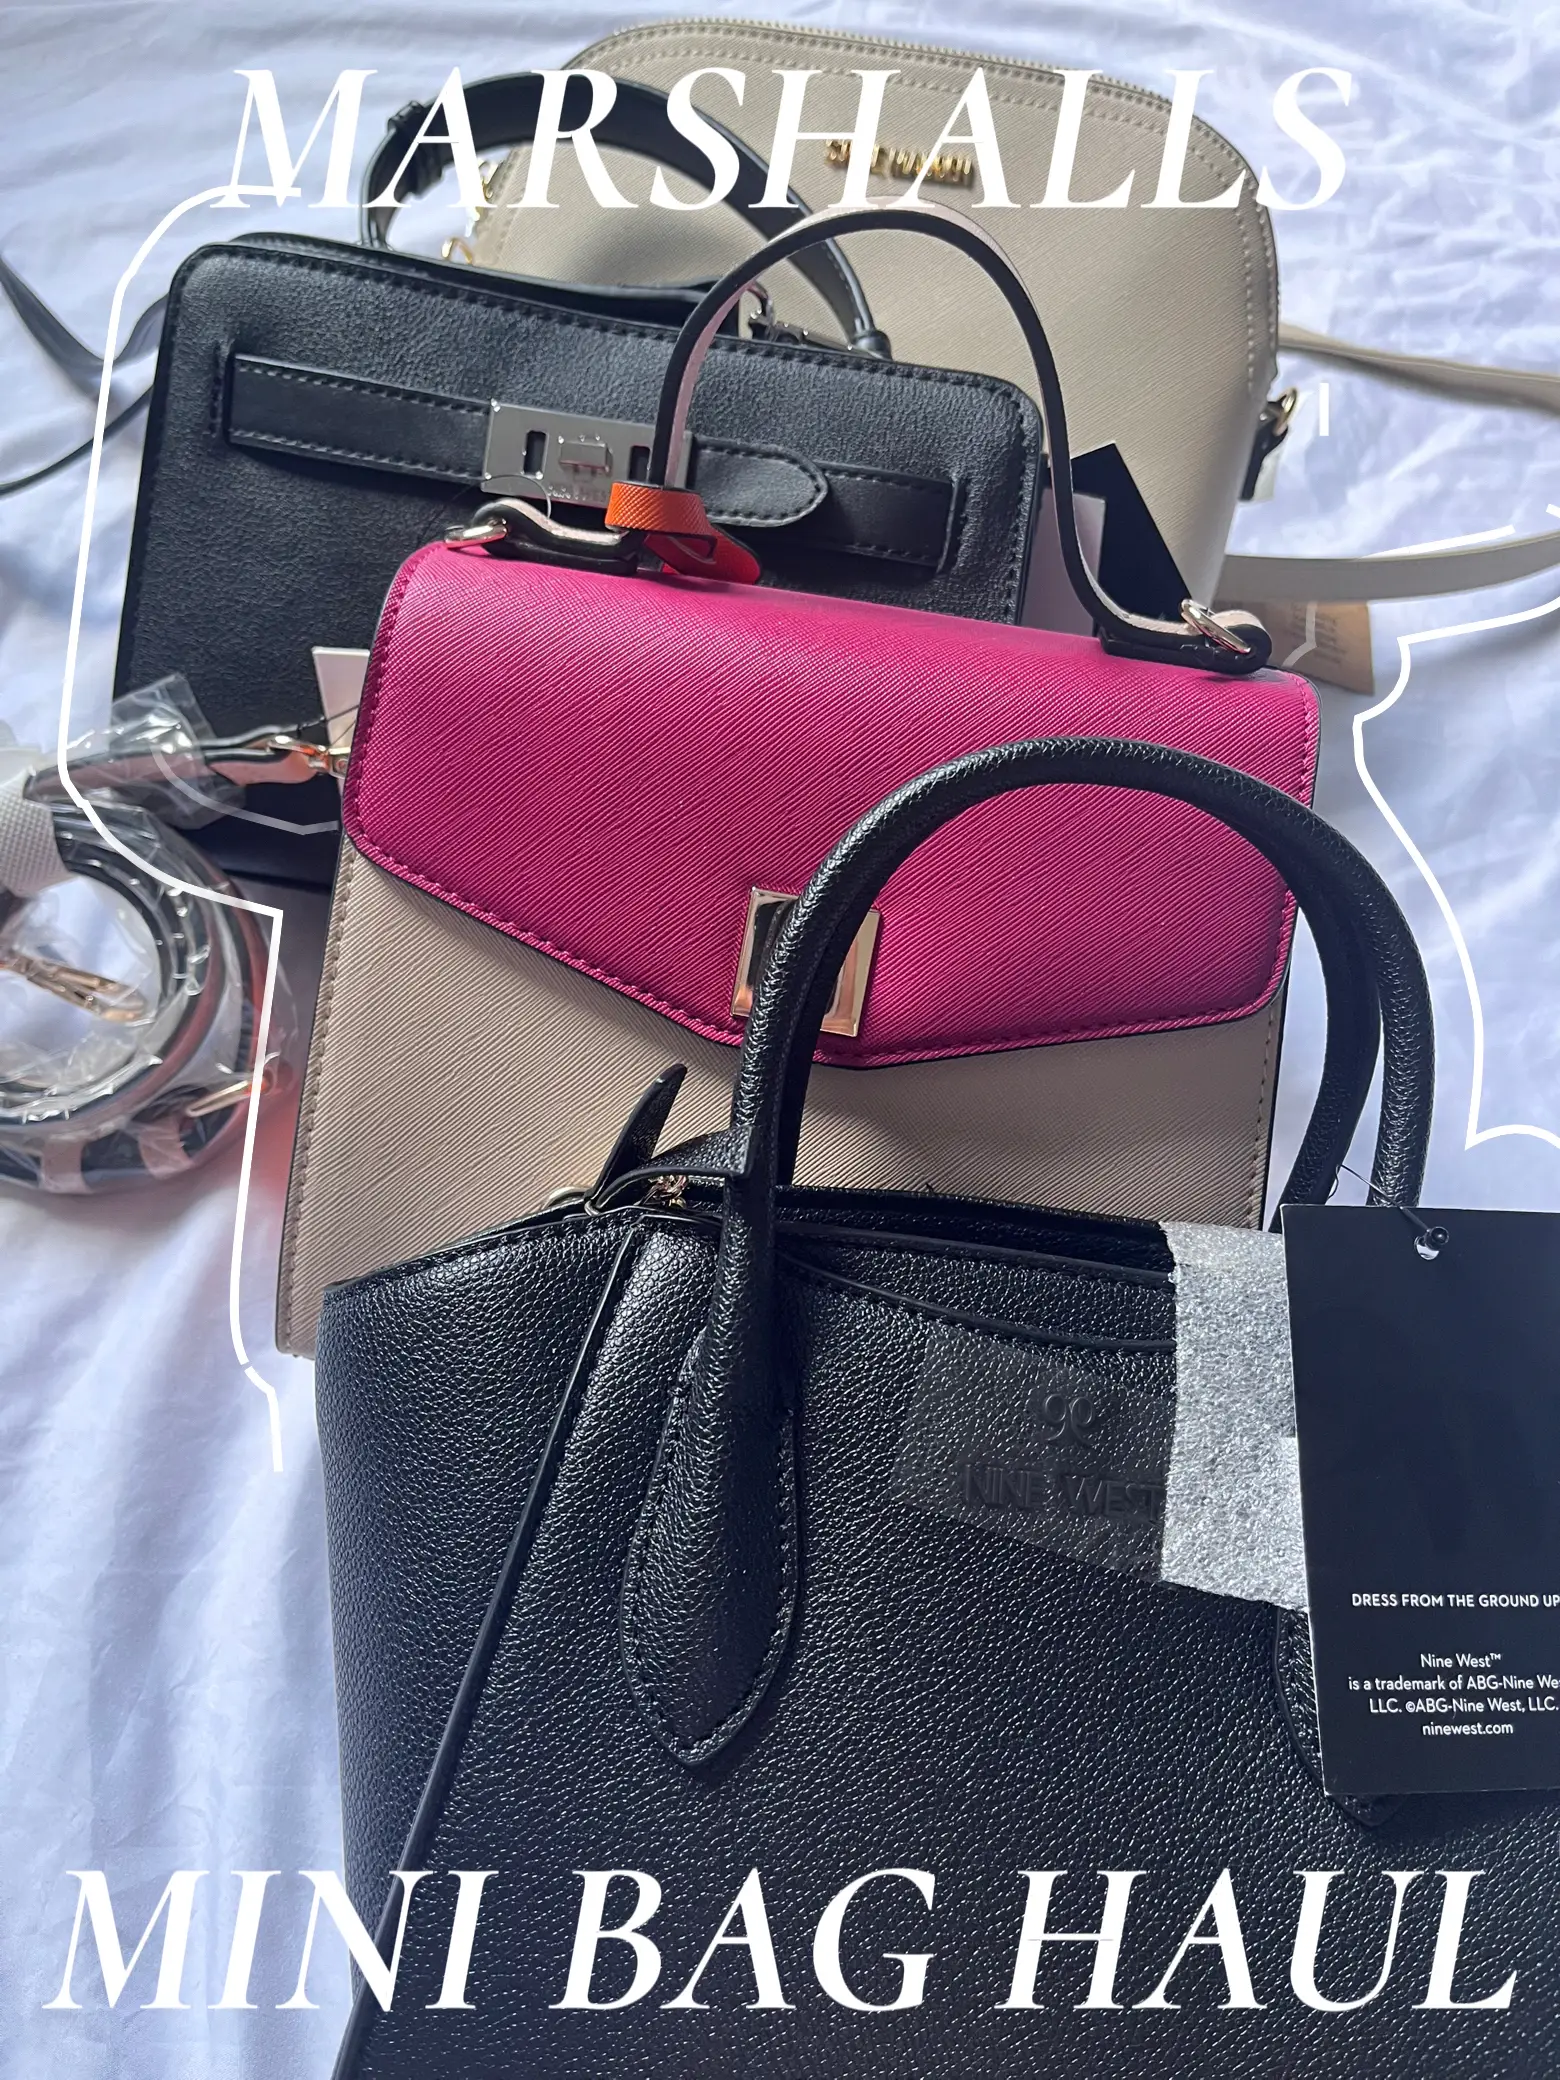 Marshalls Handbags: Designer Purses at a Discount